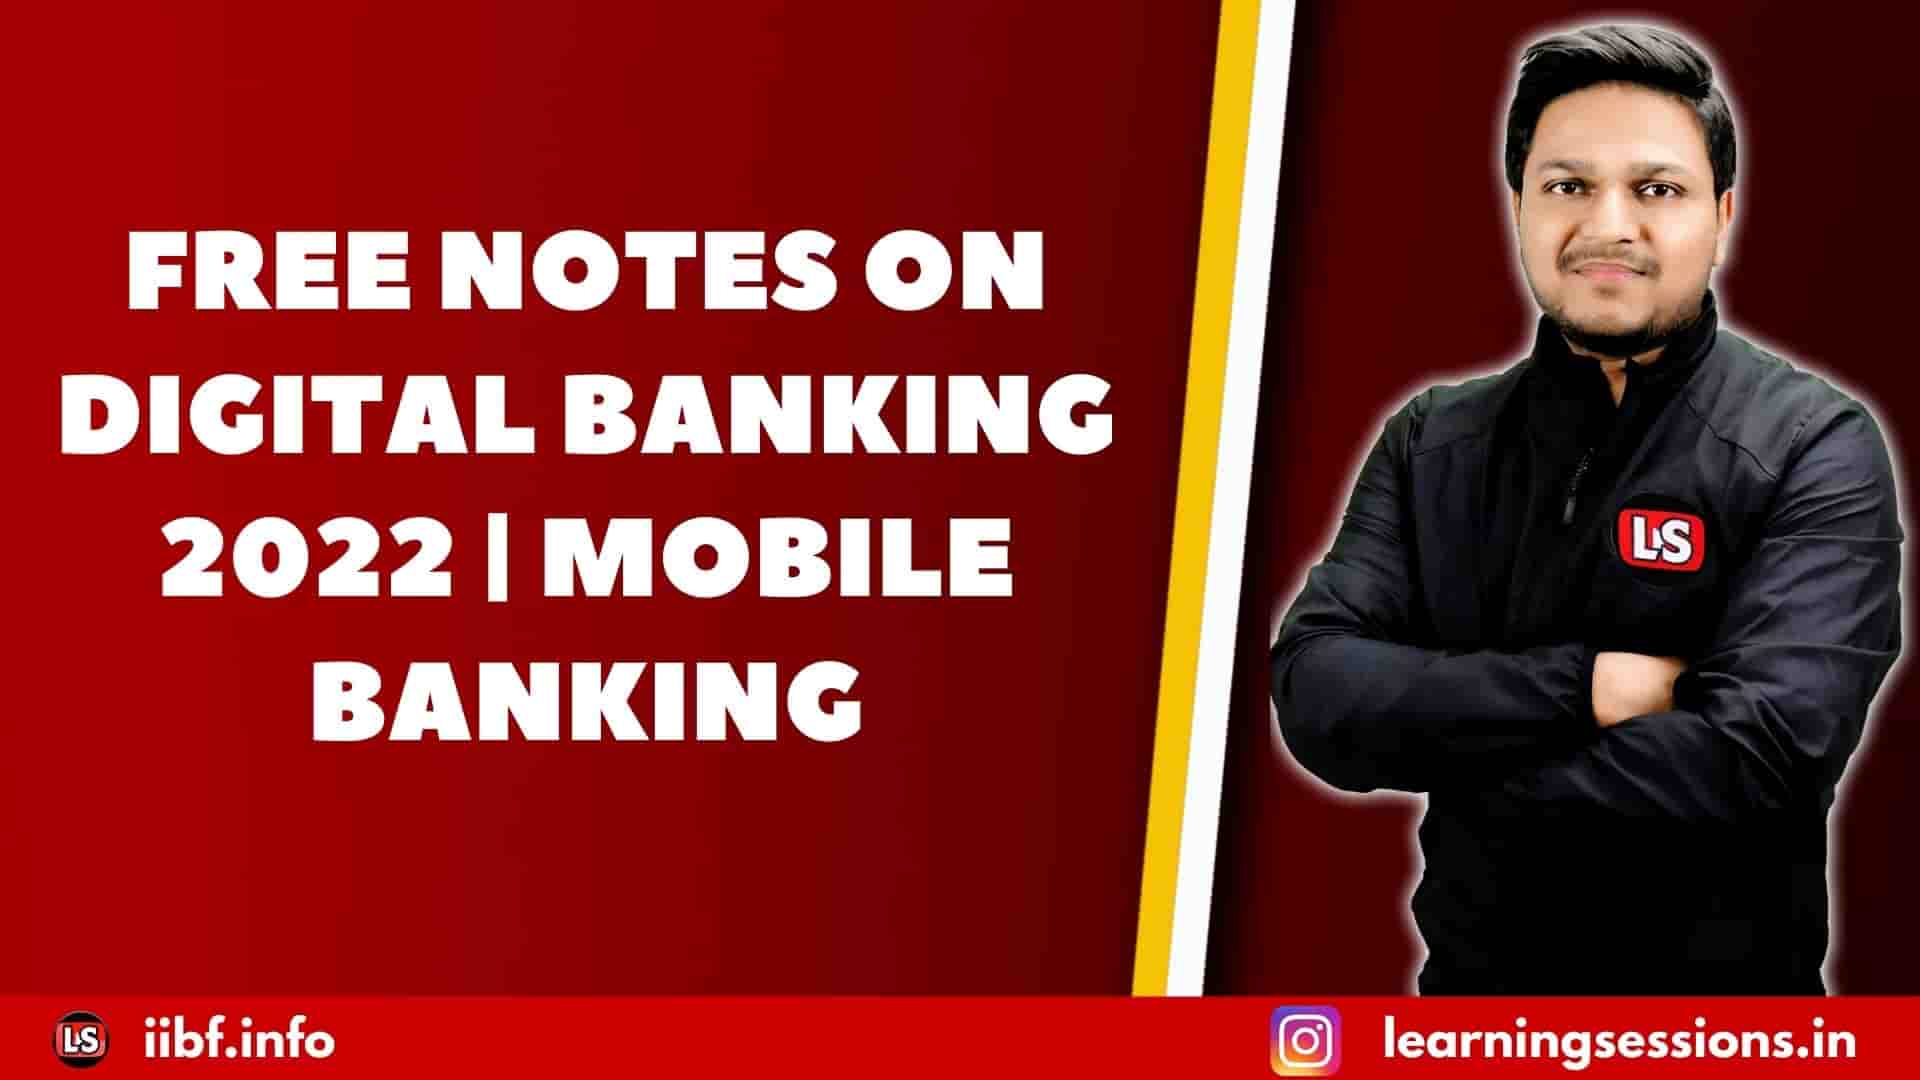 FREE NOTES ON DIGITAL BANKING 2022 | MOBILE BANKING